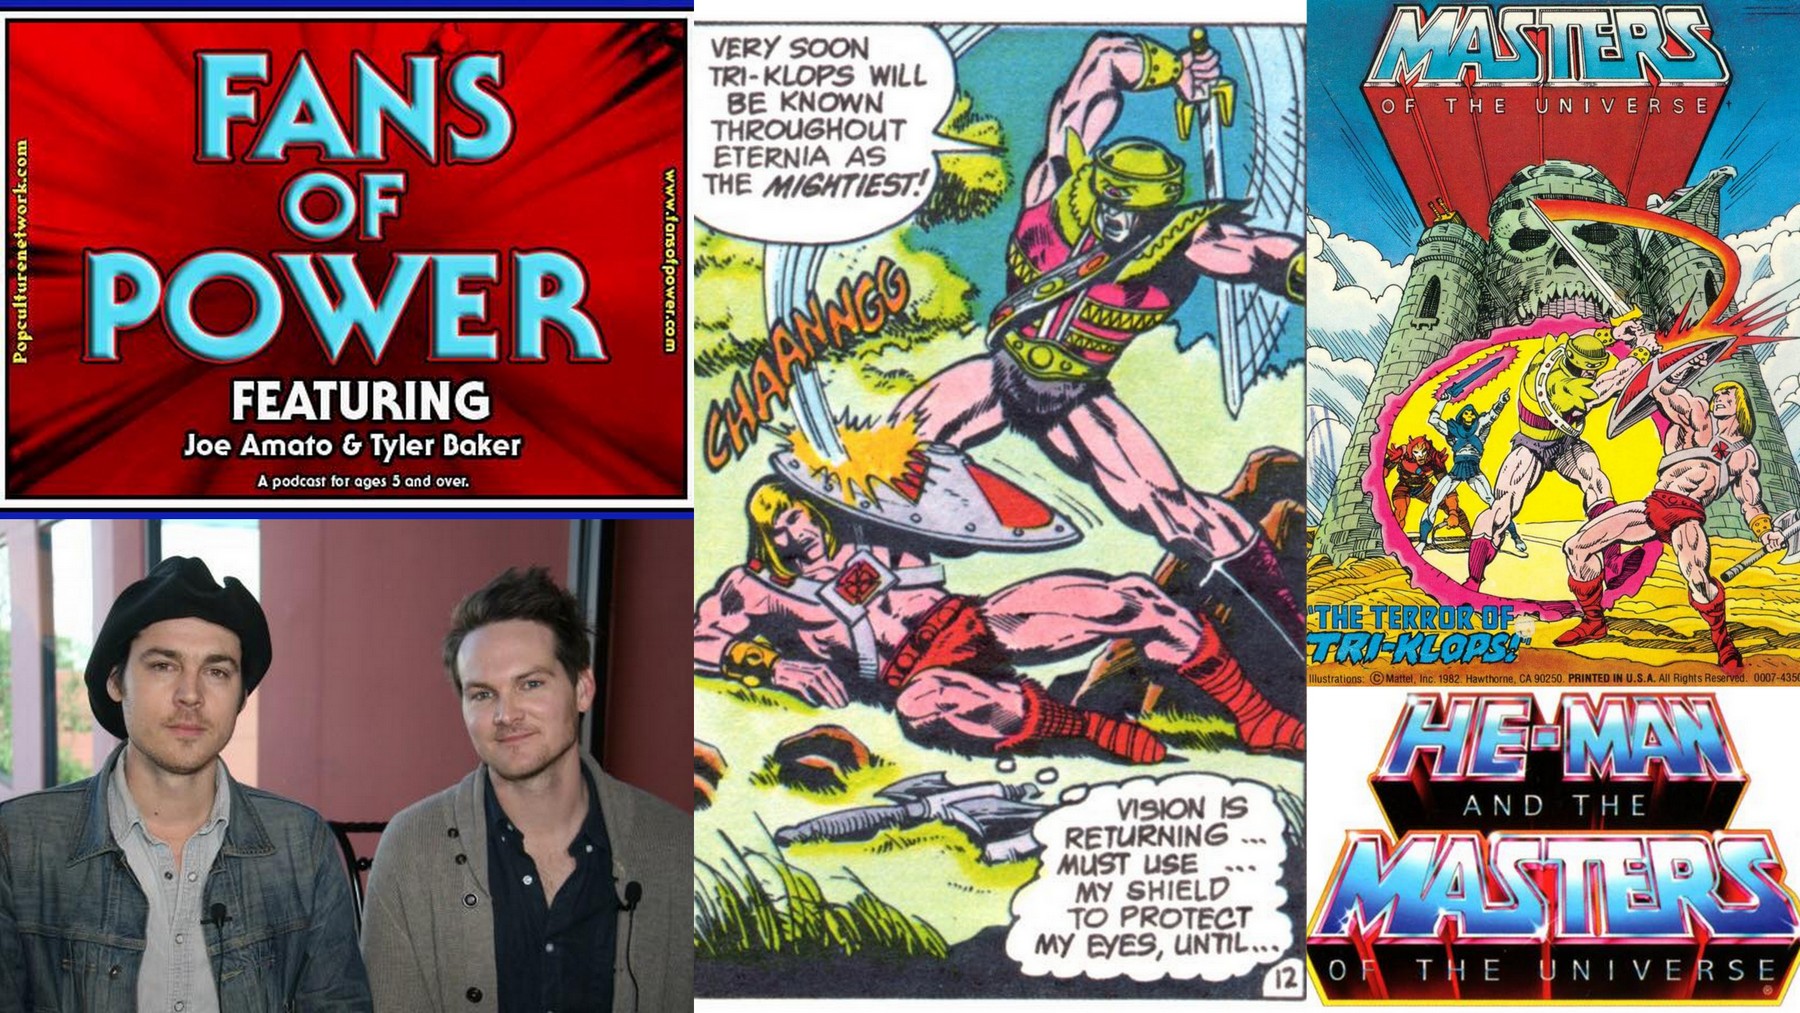 Fans of Power Episode 127 - Tri-Klops Mini Comic, New Movie Director